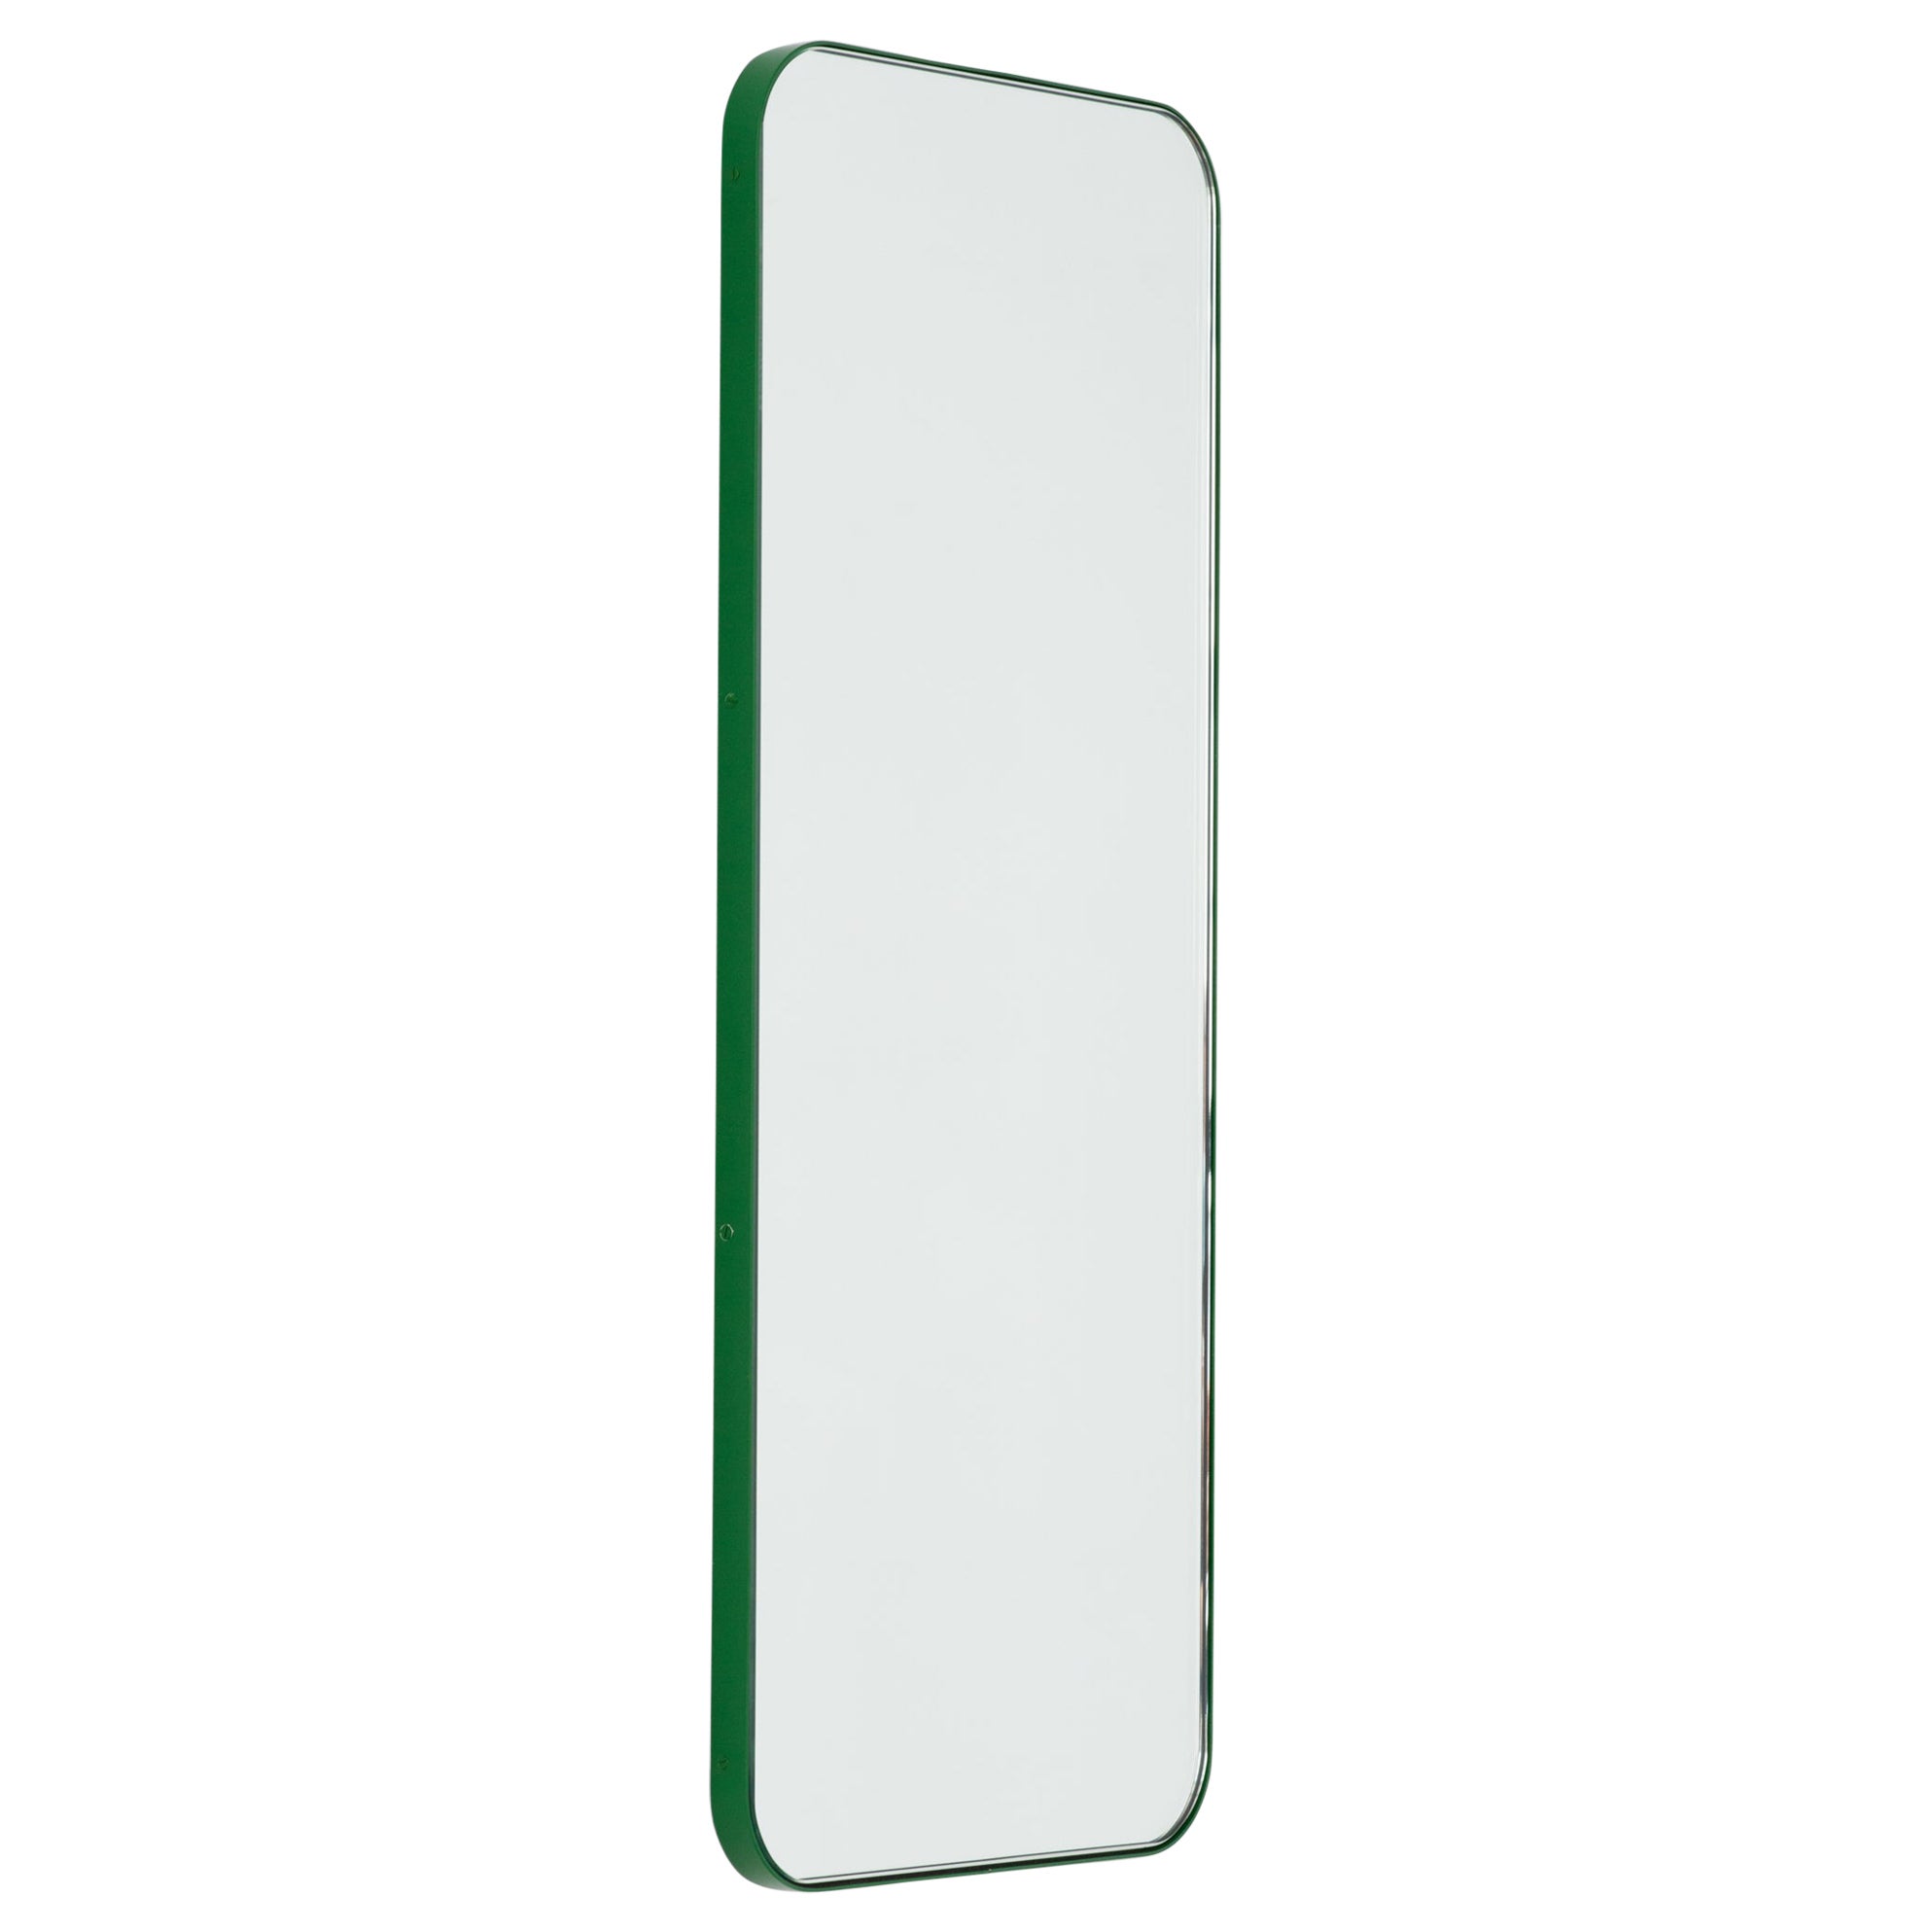 Quadris Rectangular Modern Wall Mirror with a Green Frame, XL